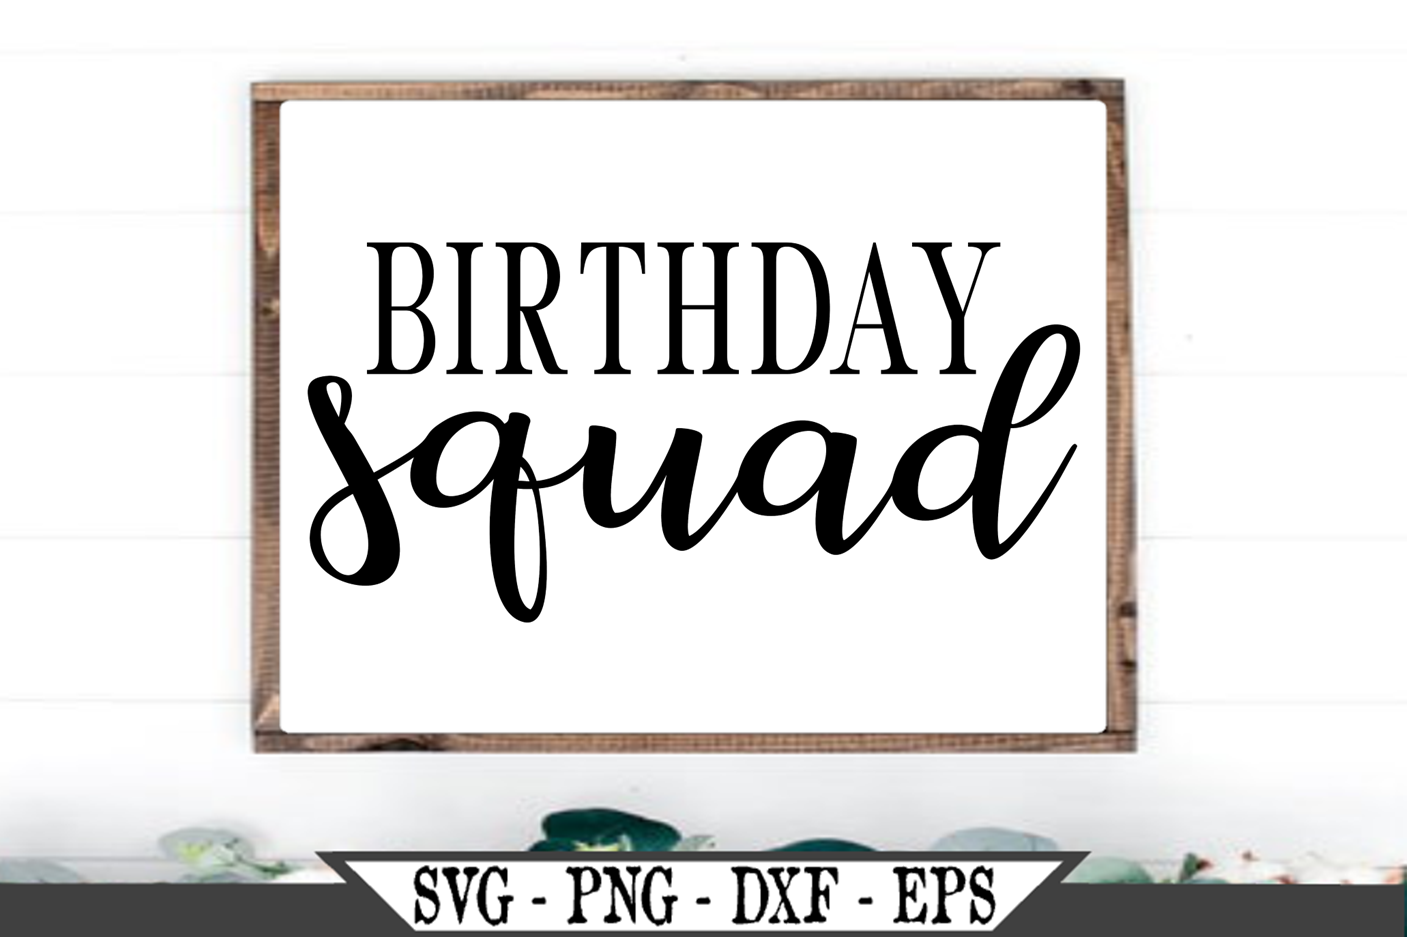 Download Funny Birthday Squad SVG